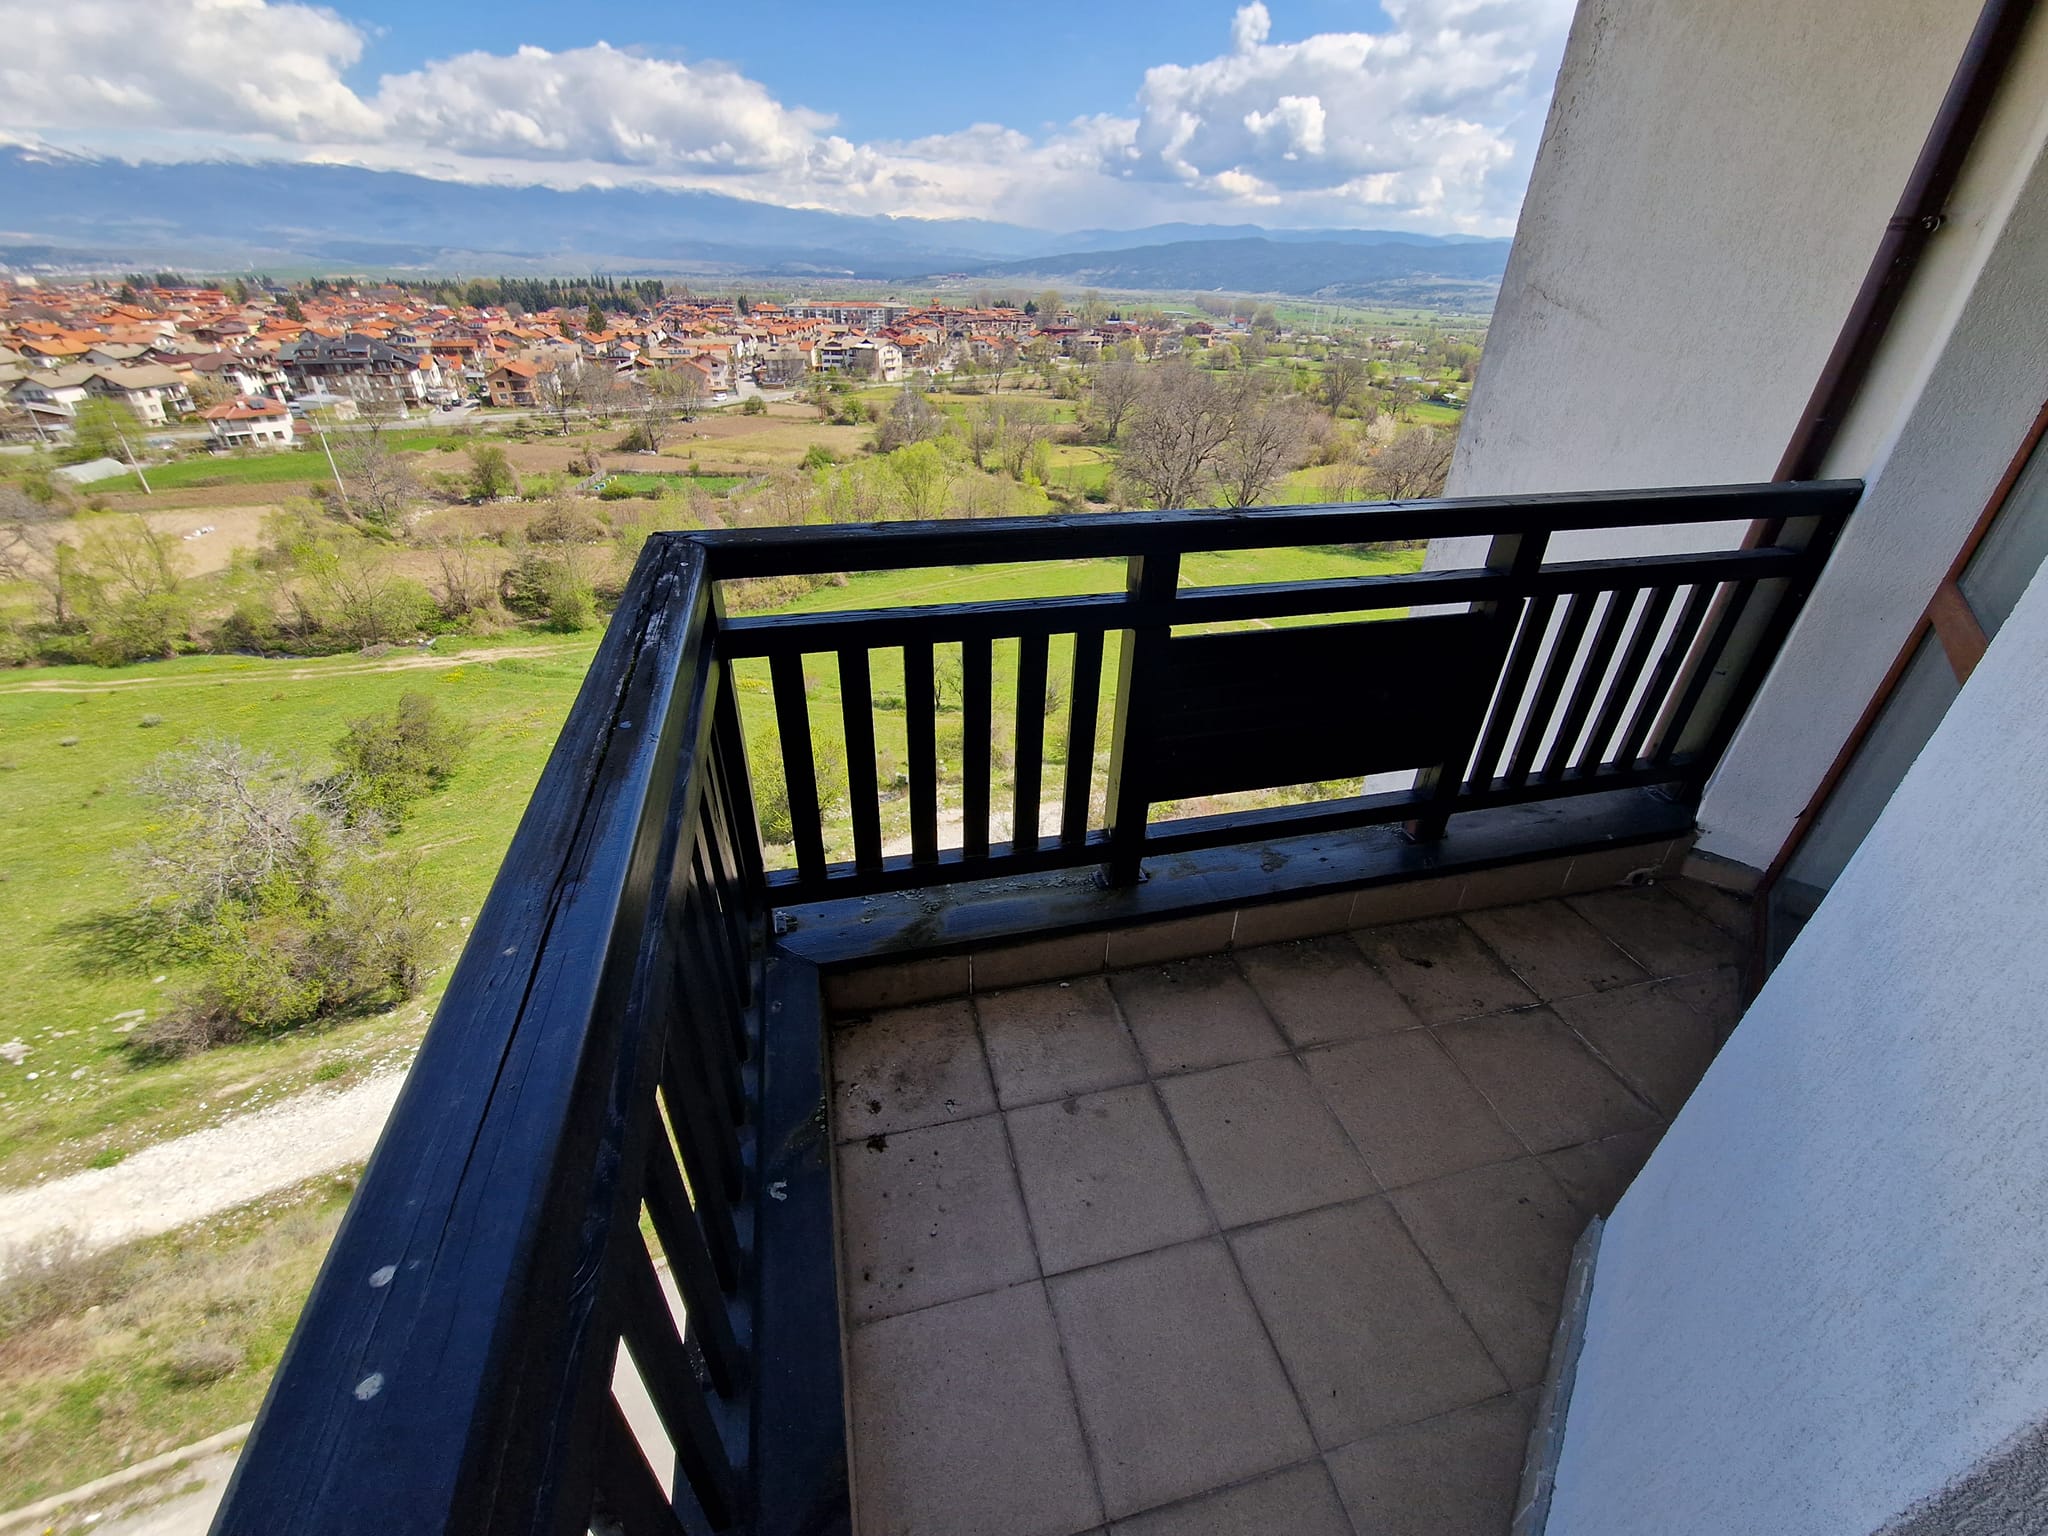 Банско: Тристаен апартамент за продажба с панорамна гледка